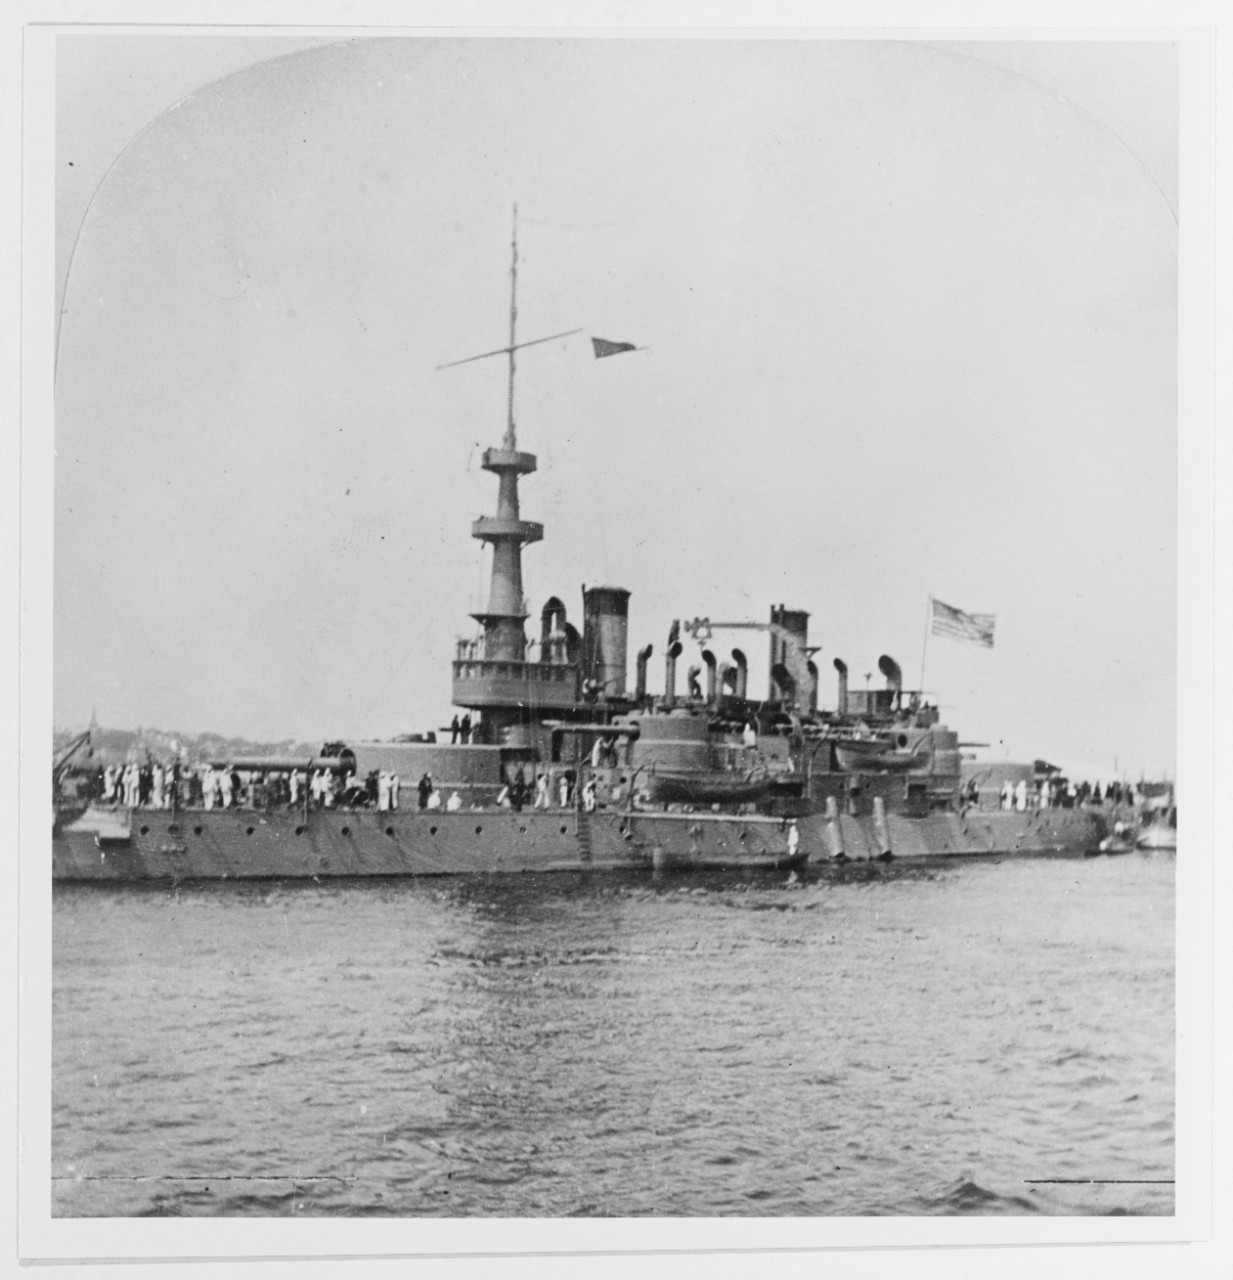 USS OREGON (BB-3)